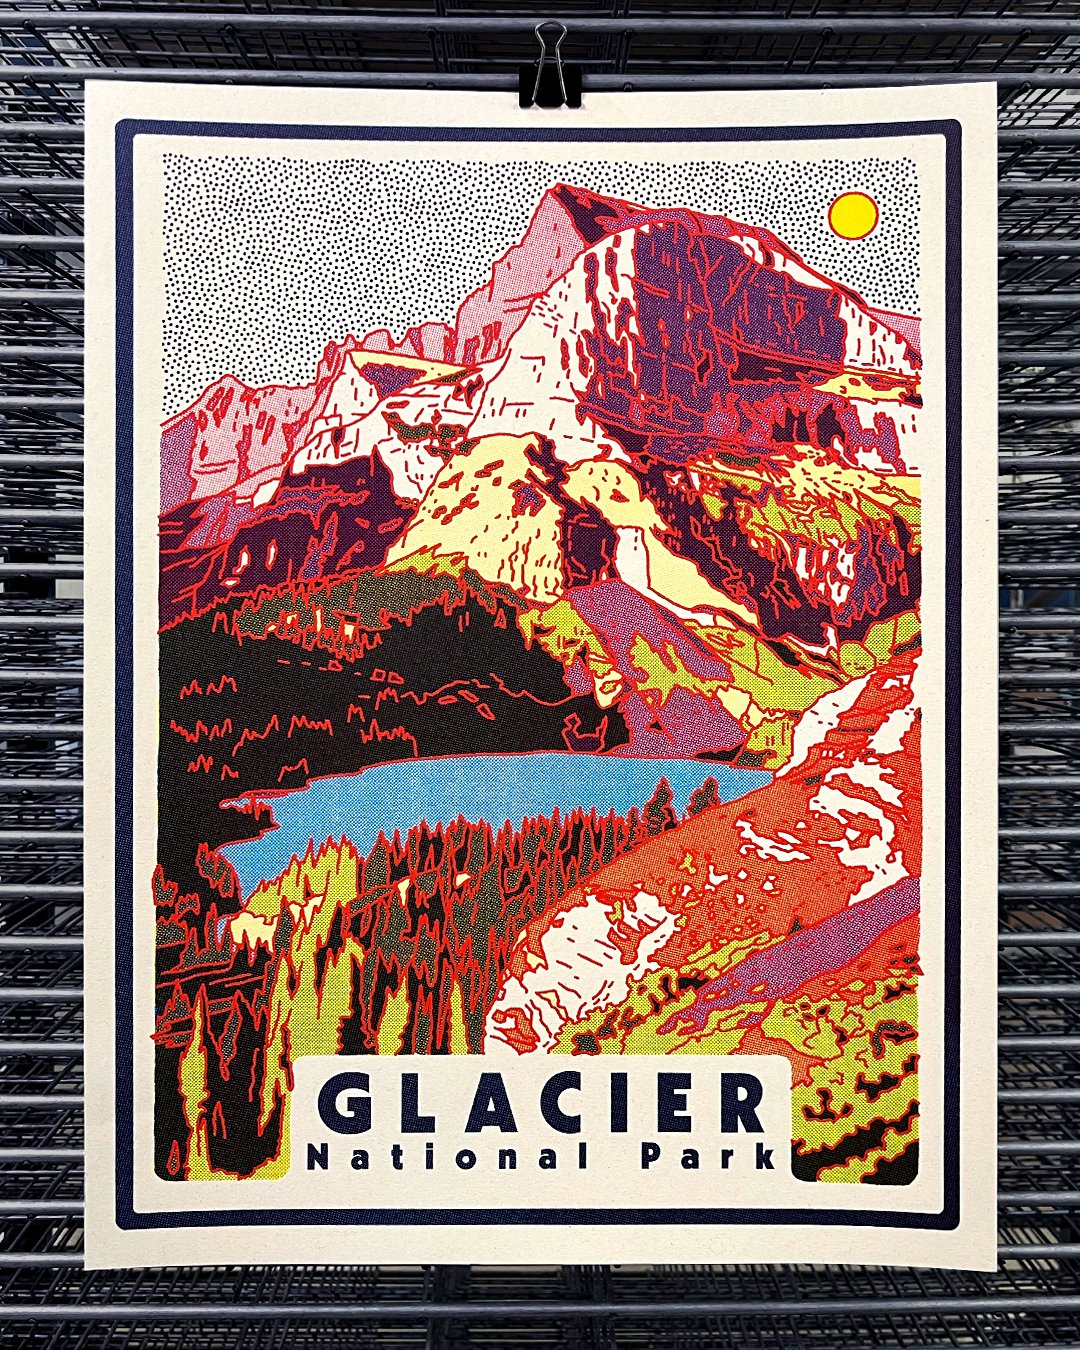 Glacier National Park - Caroline Clark